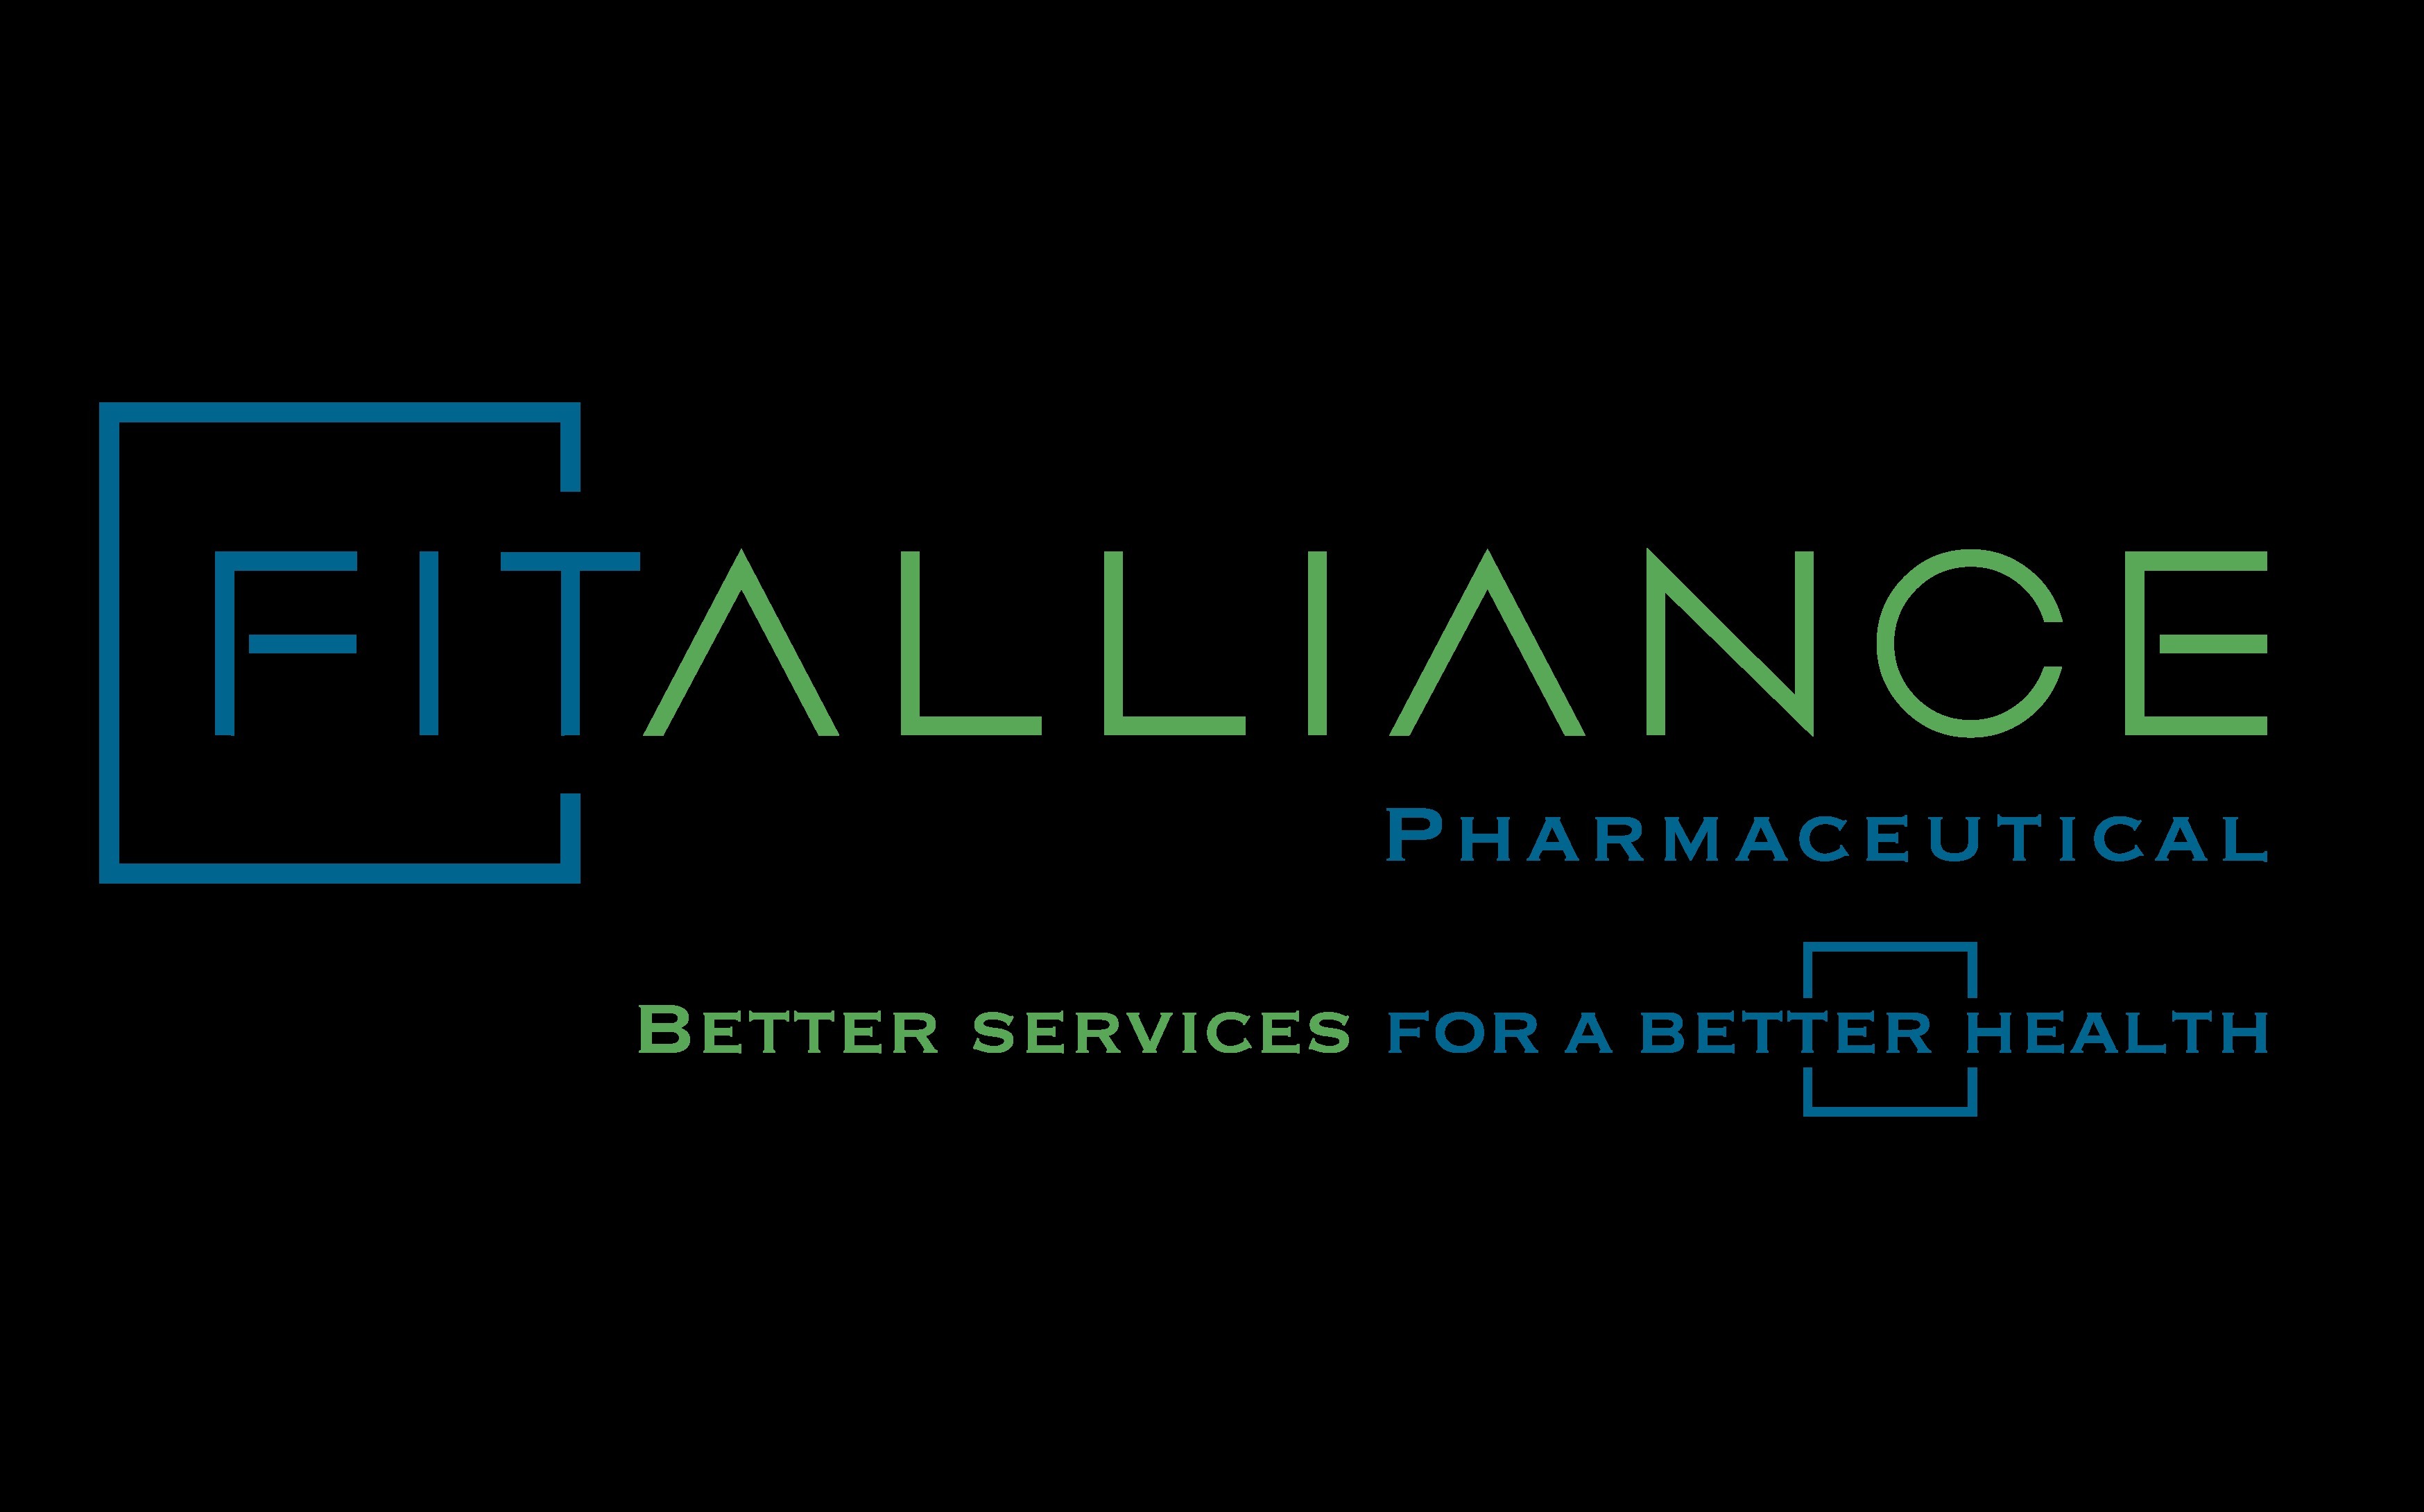  FITalliance Pharmaceutical